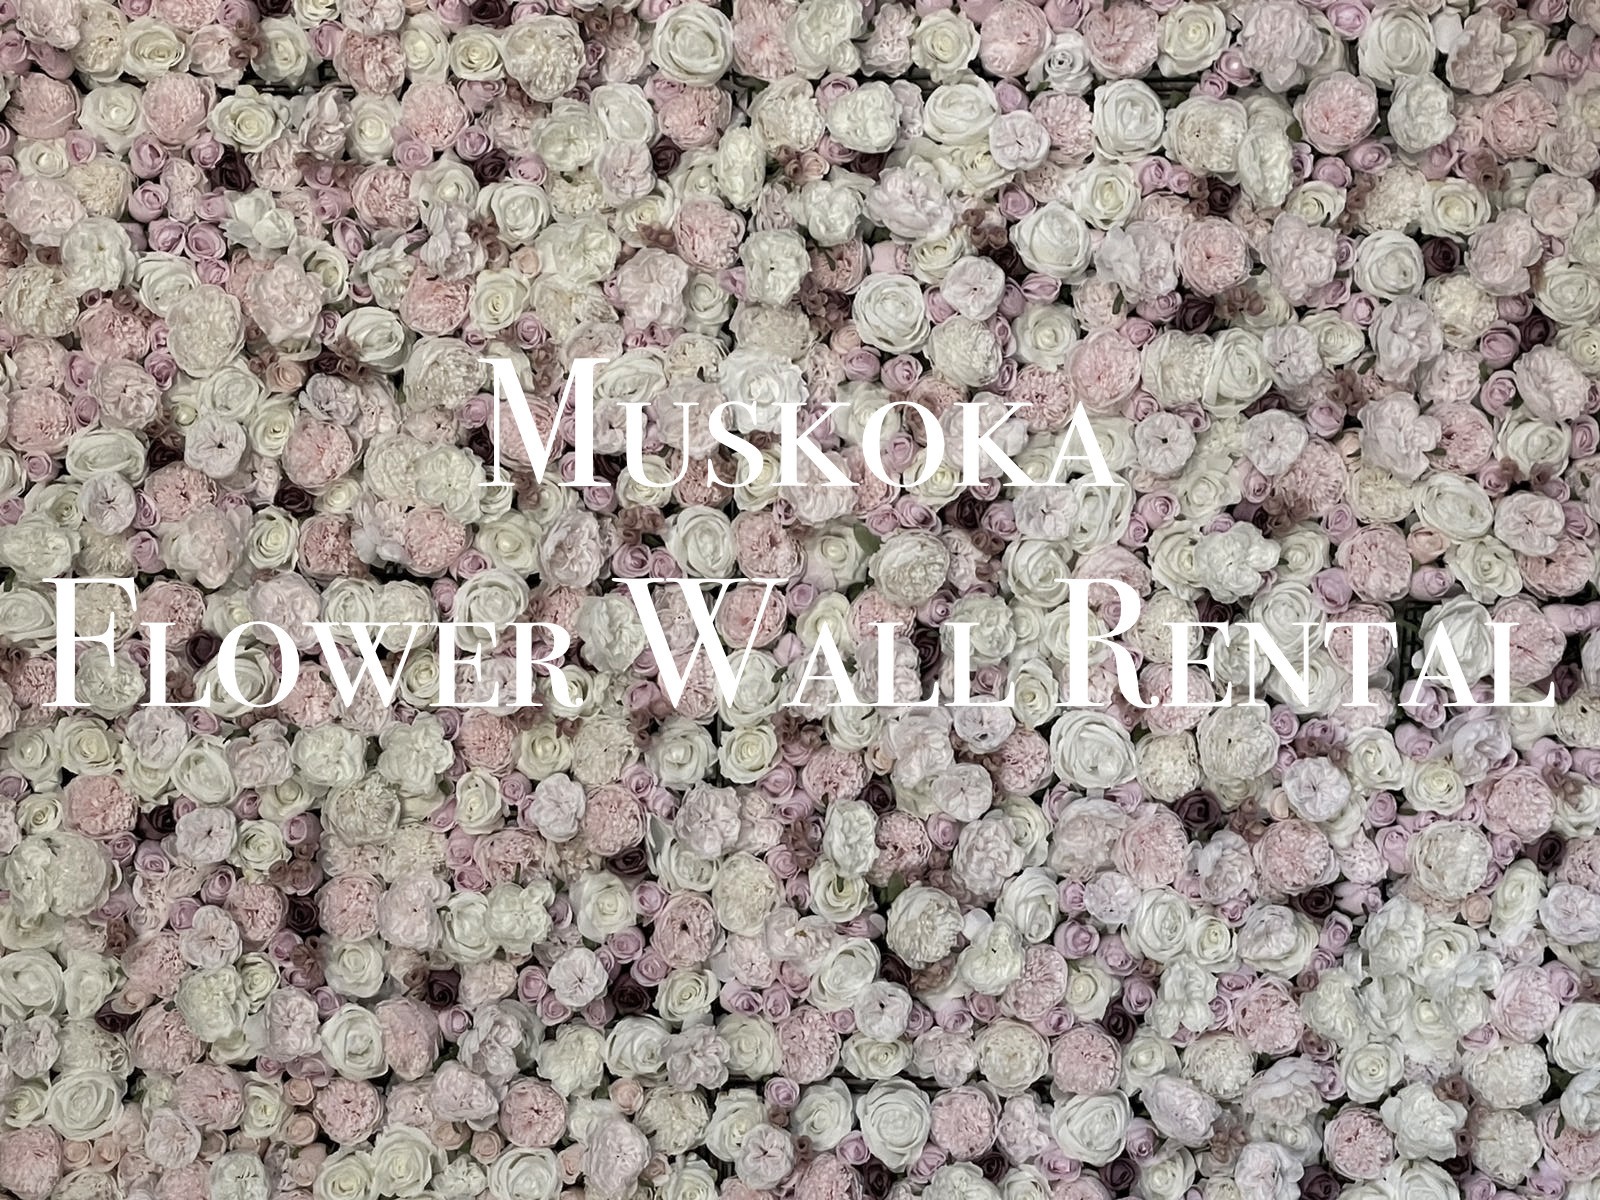 Muskoka flower wall rental company